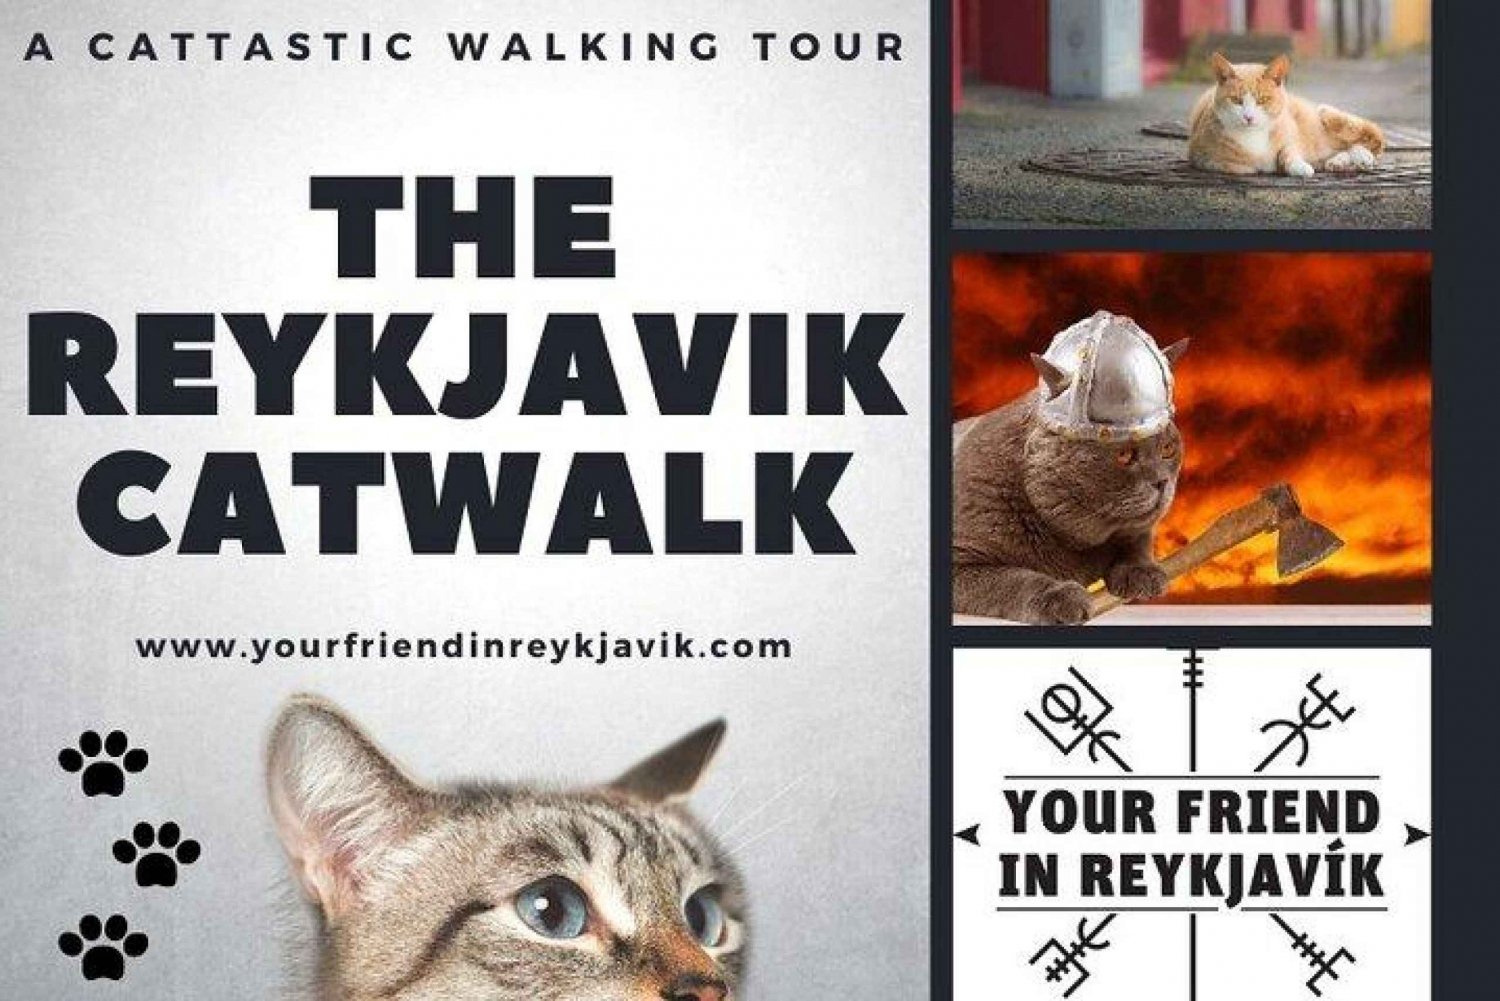 O CatWalk privado de Reykjavik